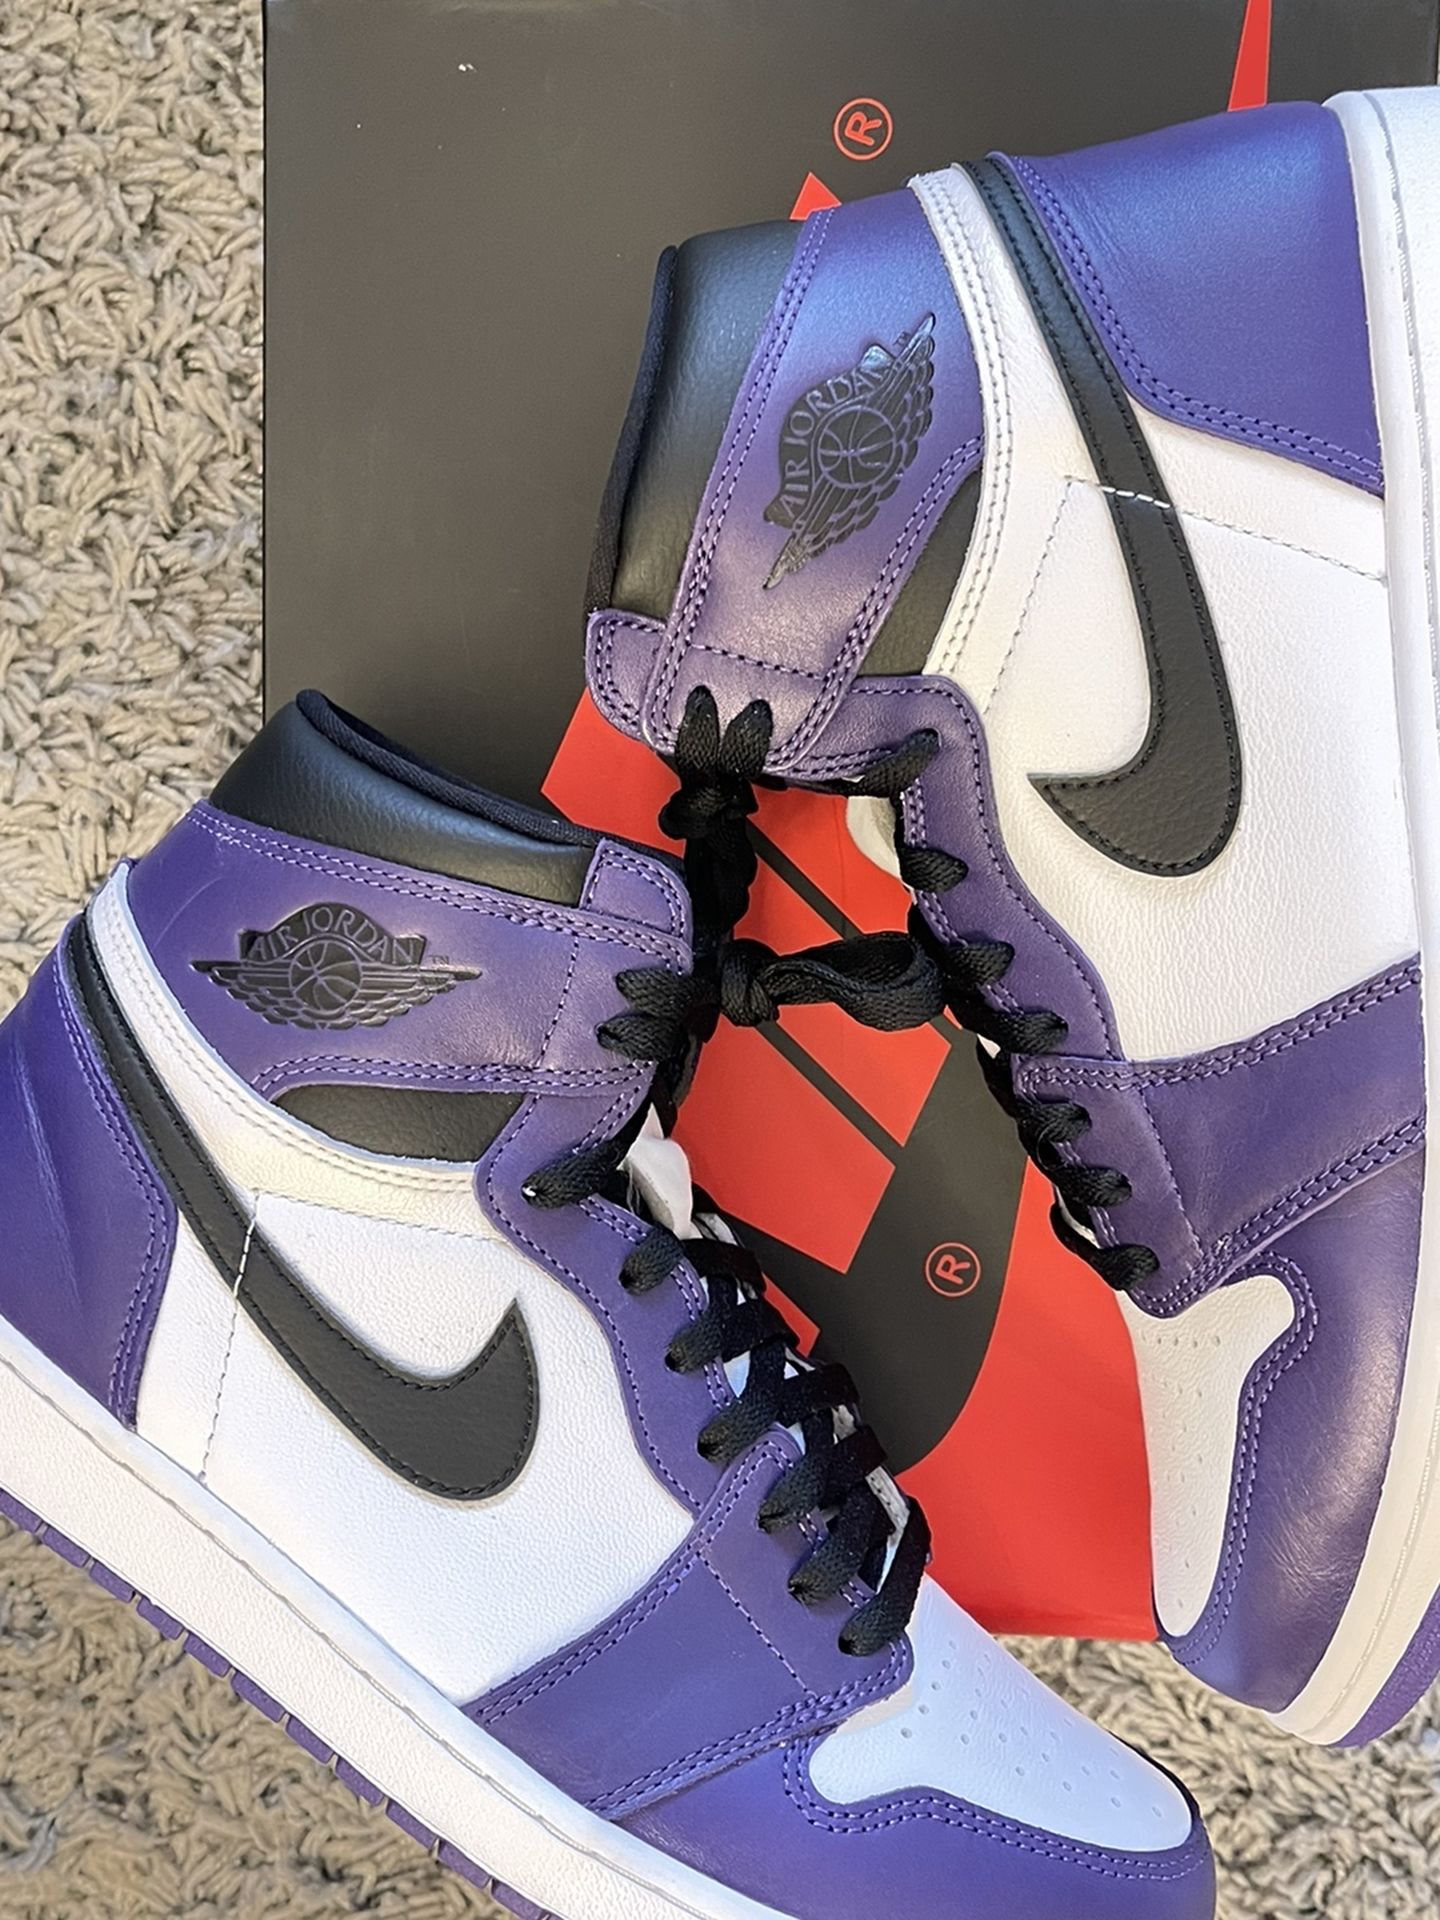 Jordan 1 Court Purple. Size 11